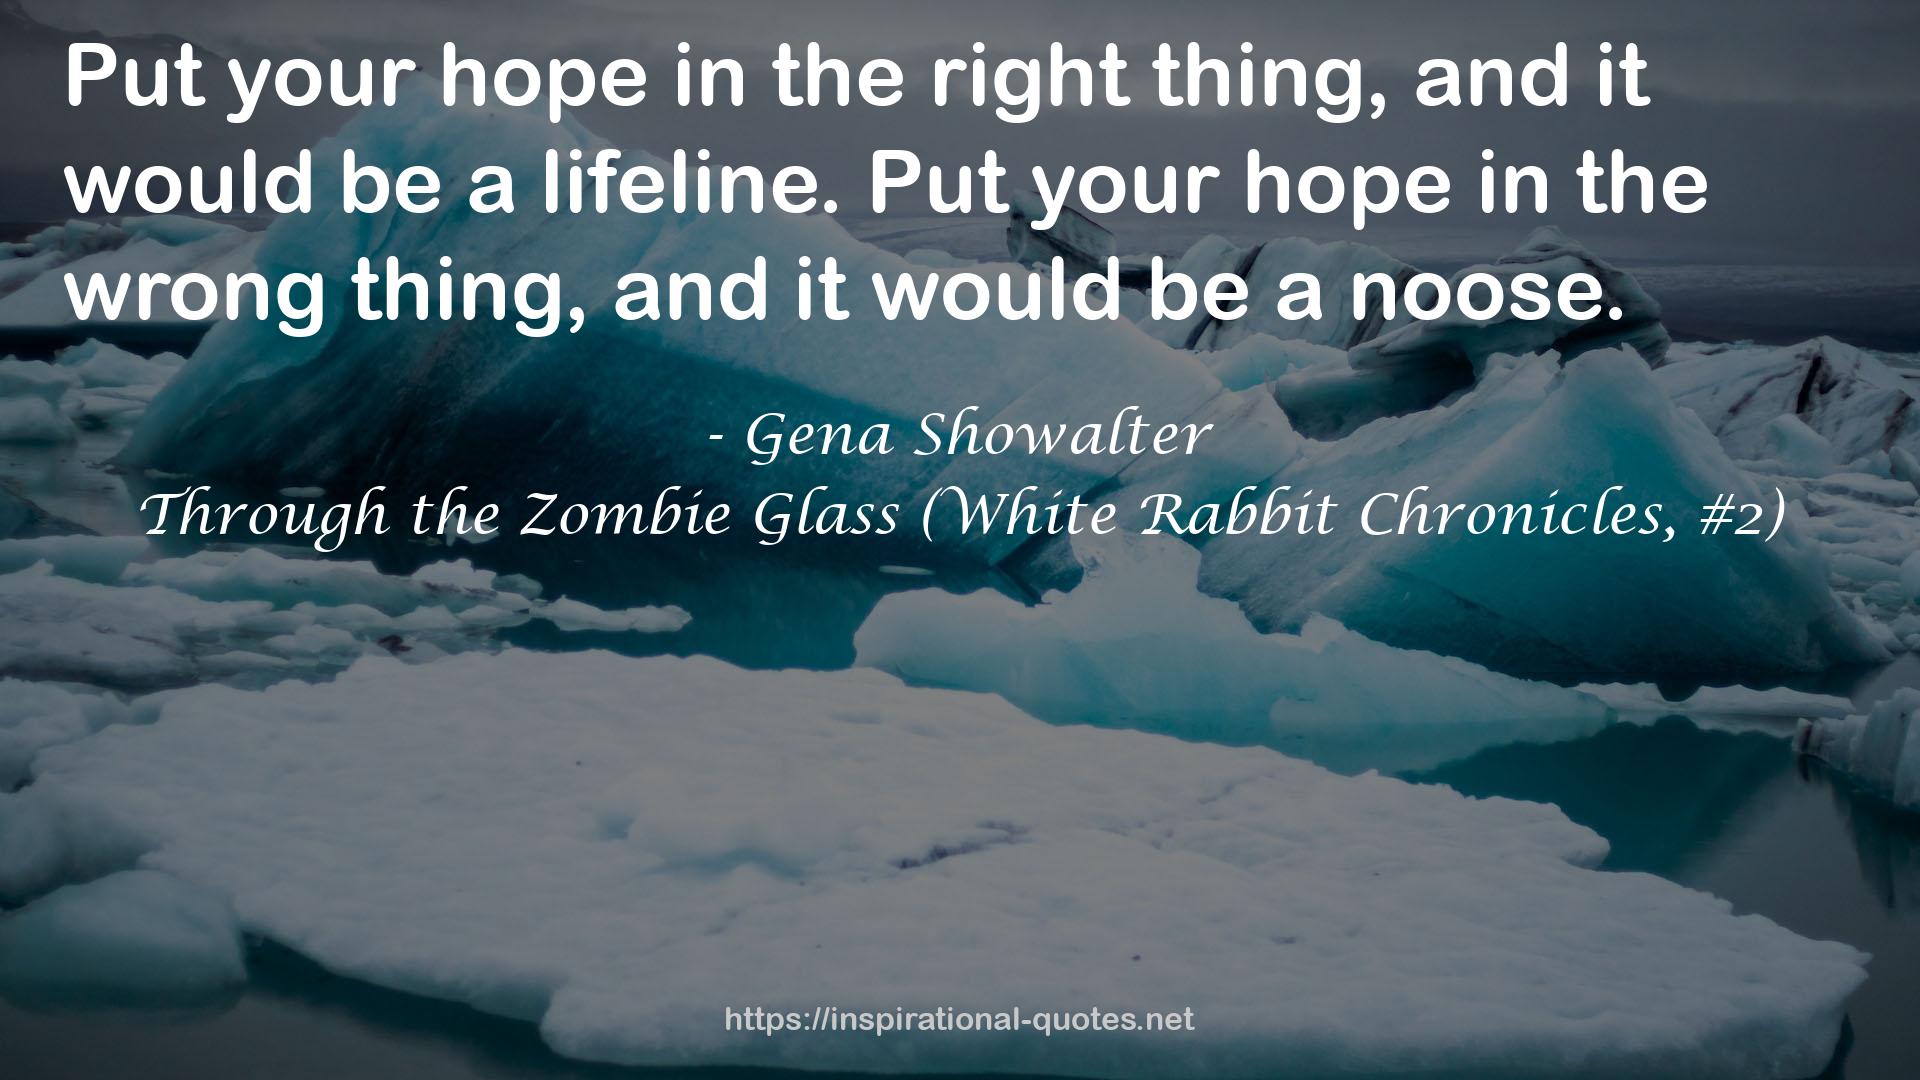 Through the Zombie Glass (White Rabbit Chronicles, #2) QUOTES